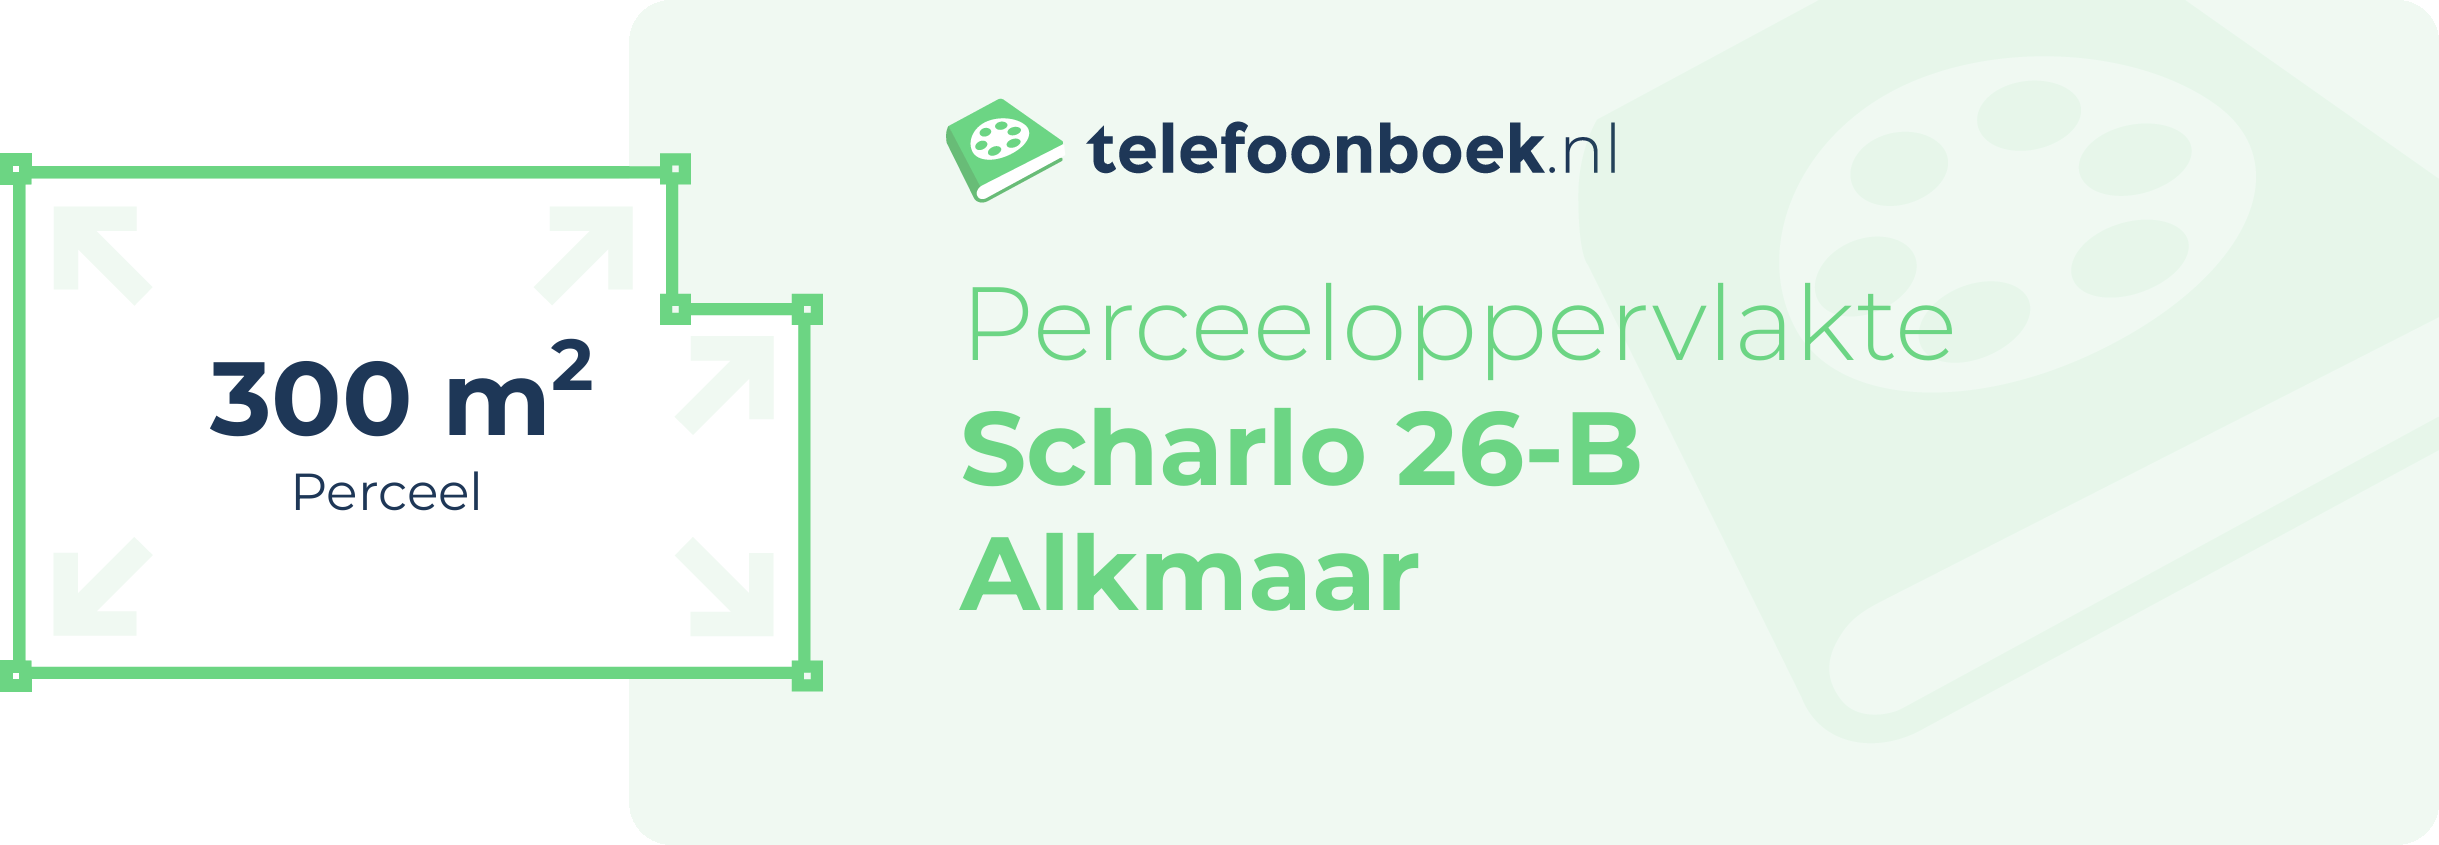 Perceeloppervlakte Scharlo 26-B Alkmaar